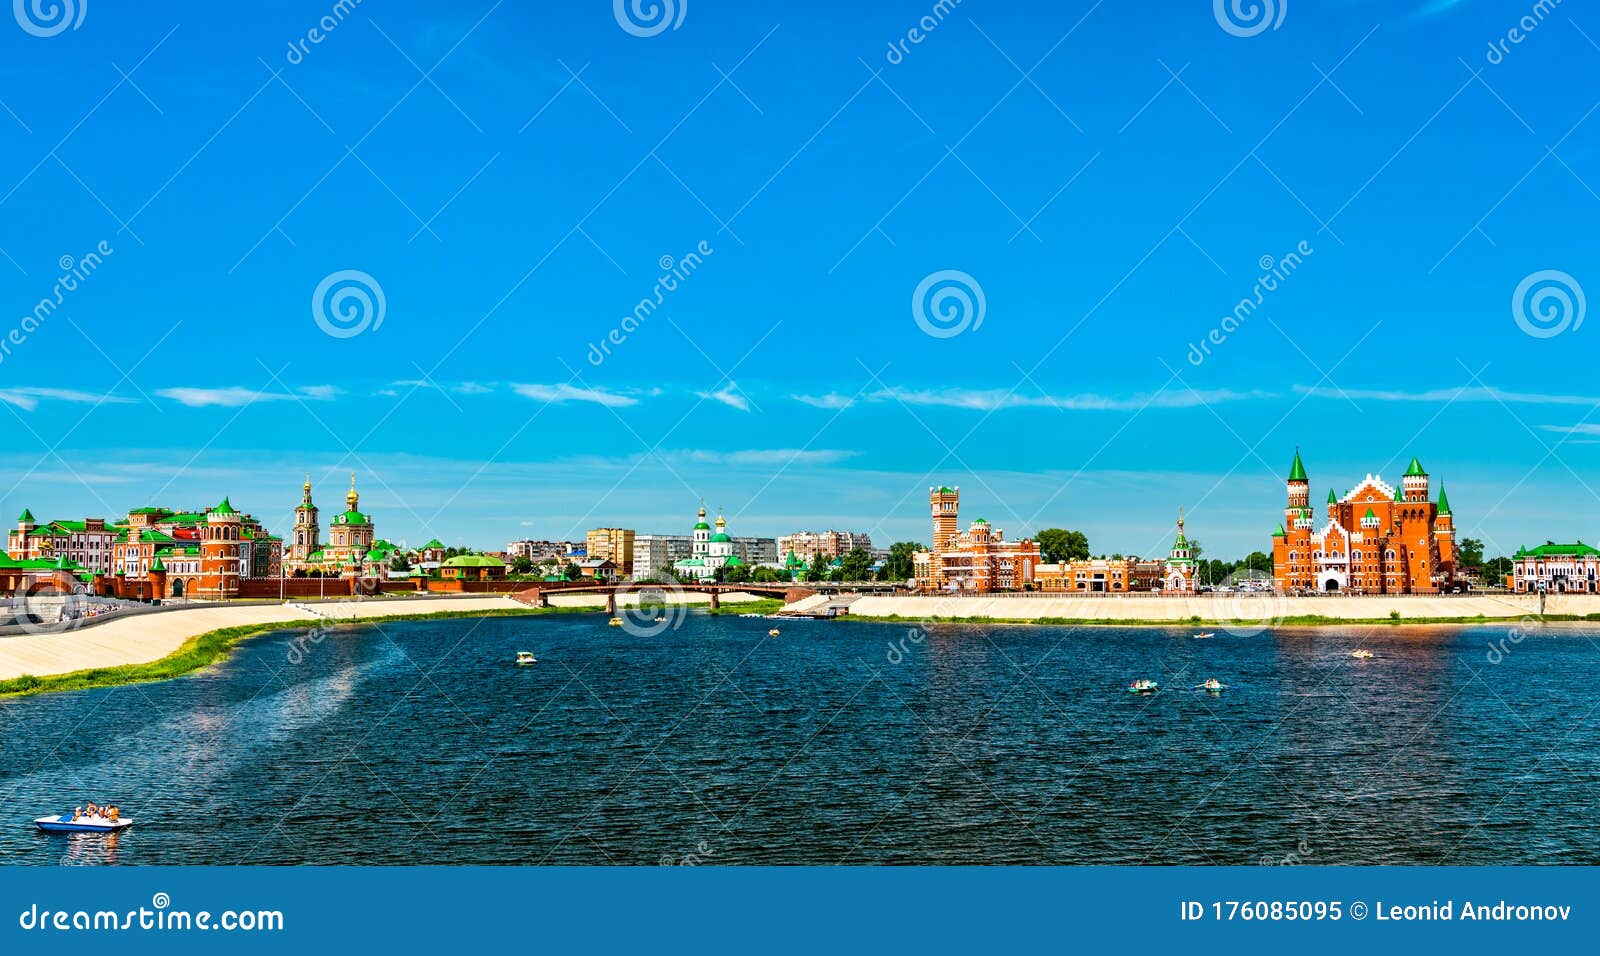 cityscape of yoshkar-ola at the malaya kokshaga river in russia